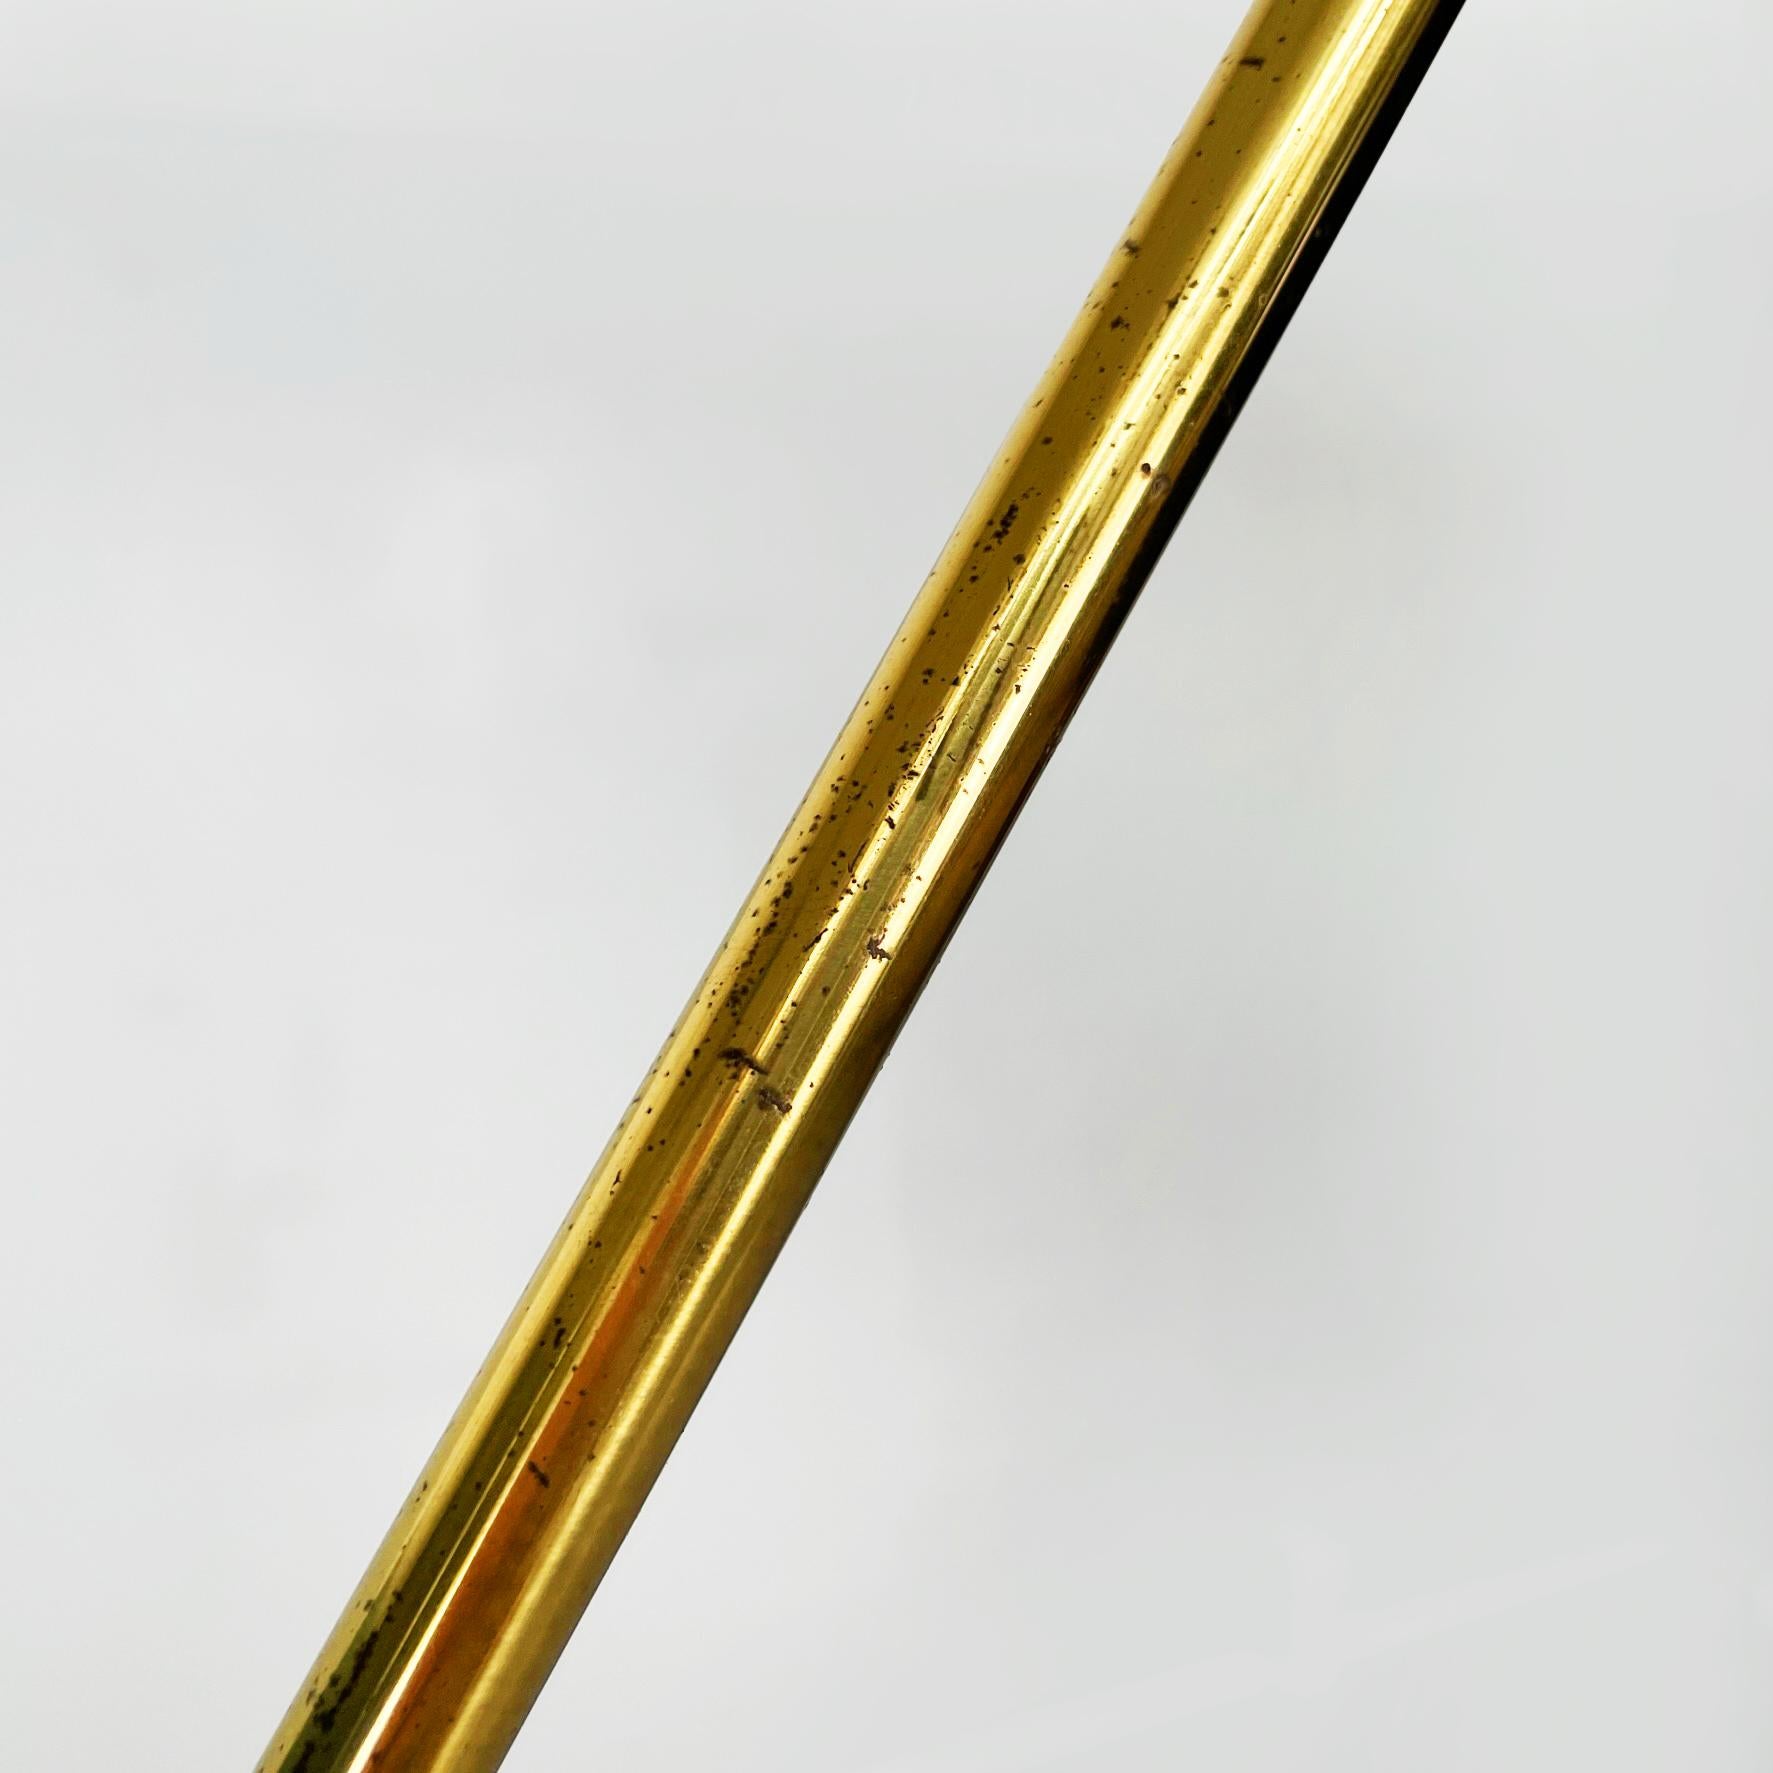 Italian Mid-Century Modern Adjustable Brass Metal Floor Lamp by Stilux, 1950s For Sale 5